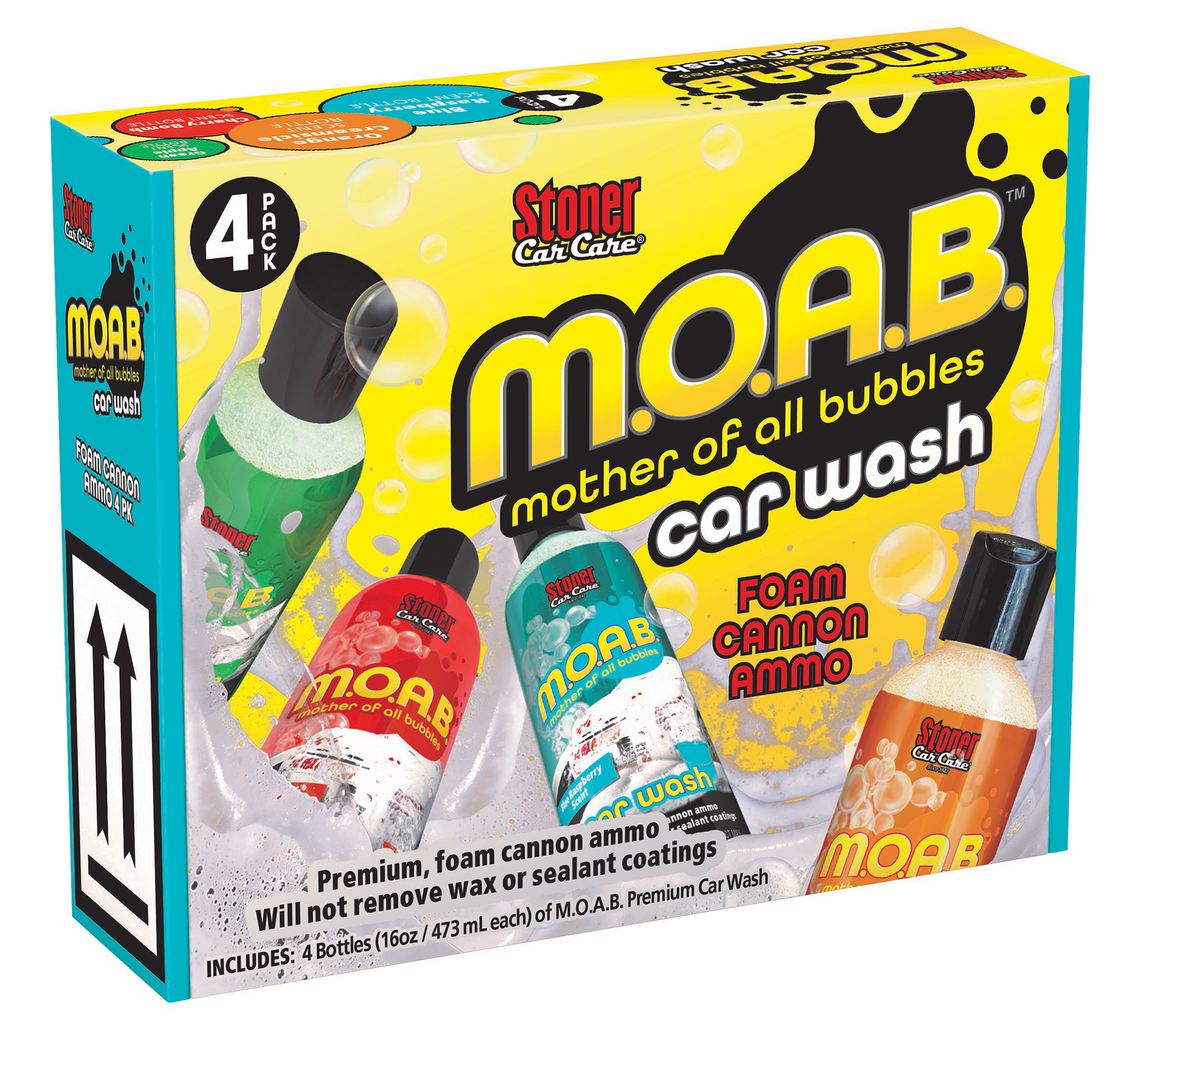 Mothers Instant Detailer Spray Exterior Car Detailer, 24 oz. (4-Pack)